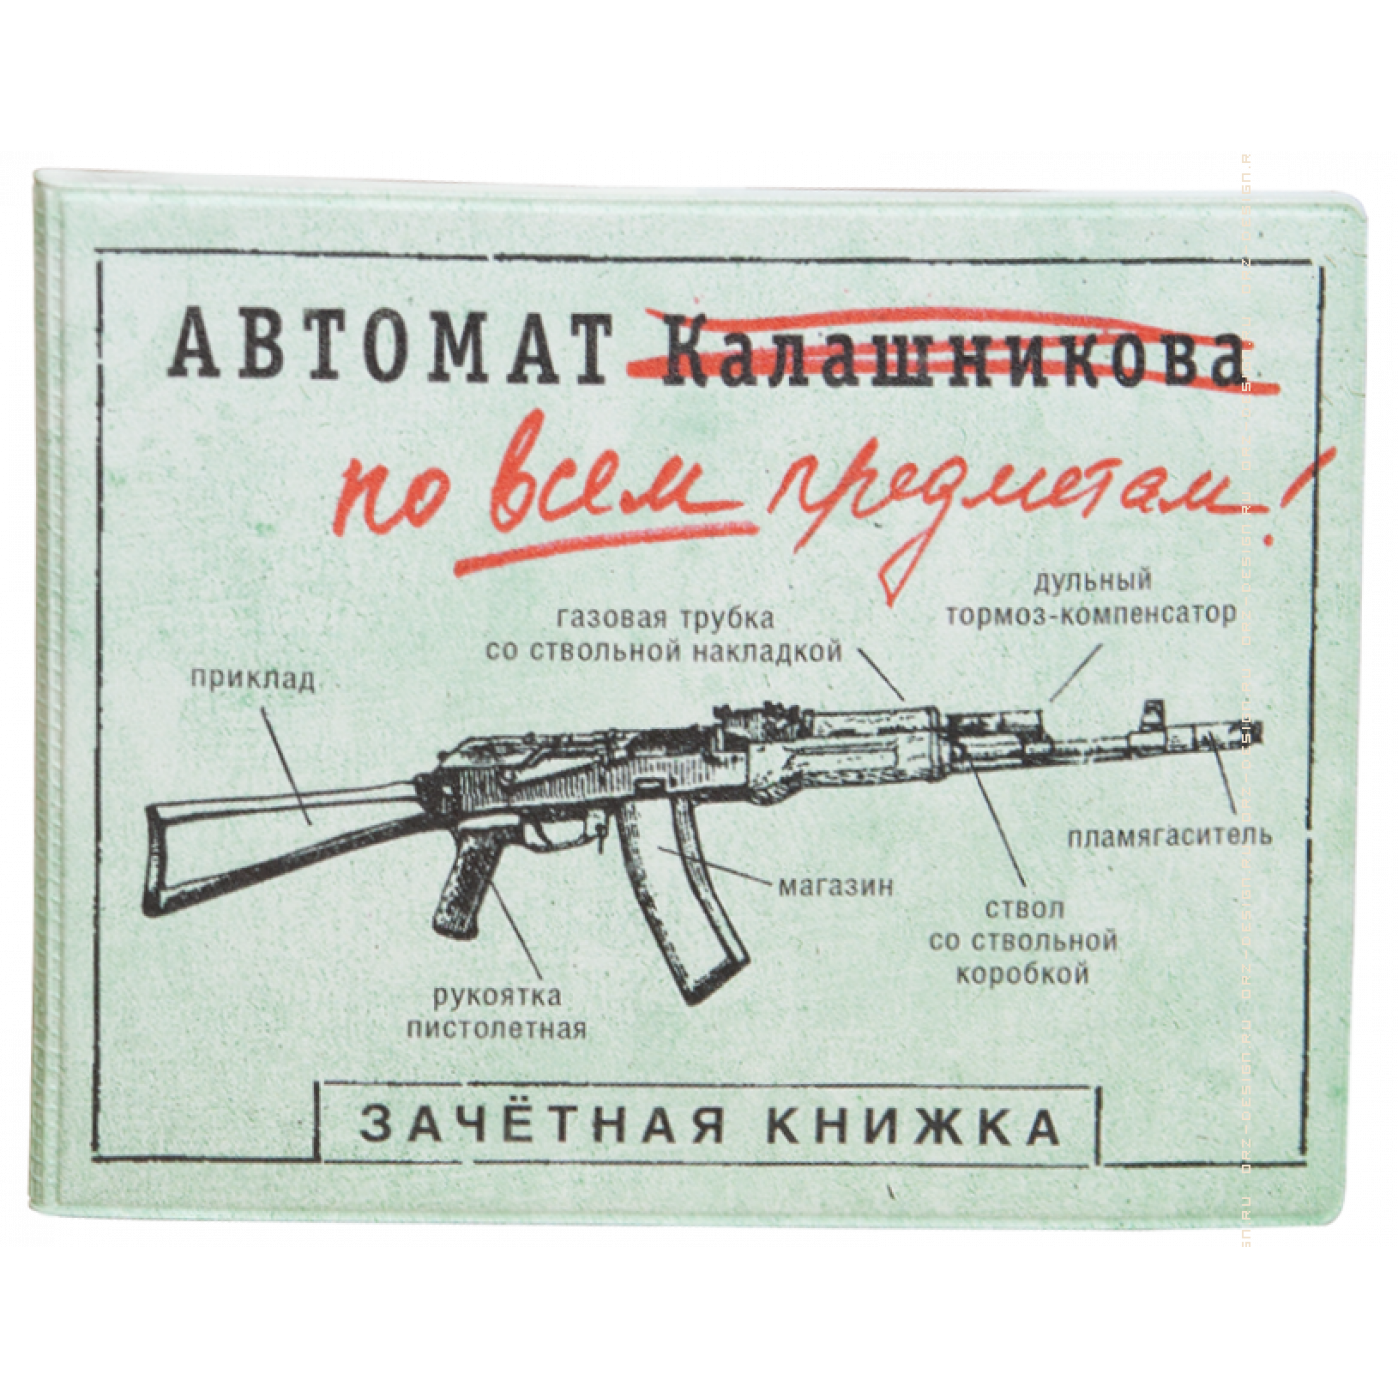 Обложка на зачетную книжку  Автомат калашникова 